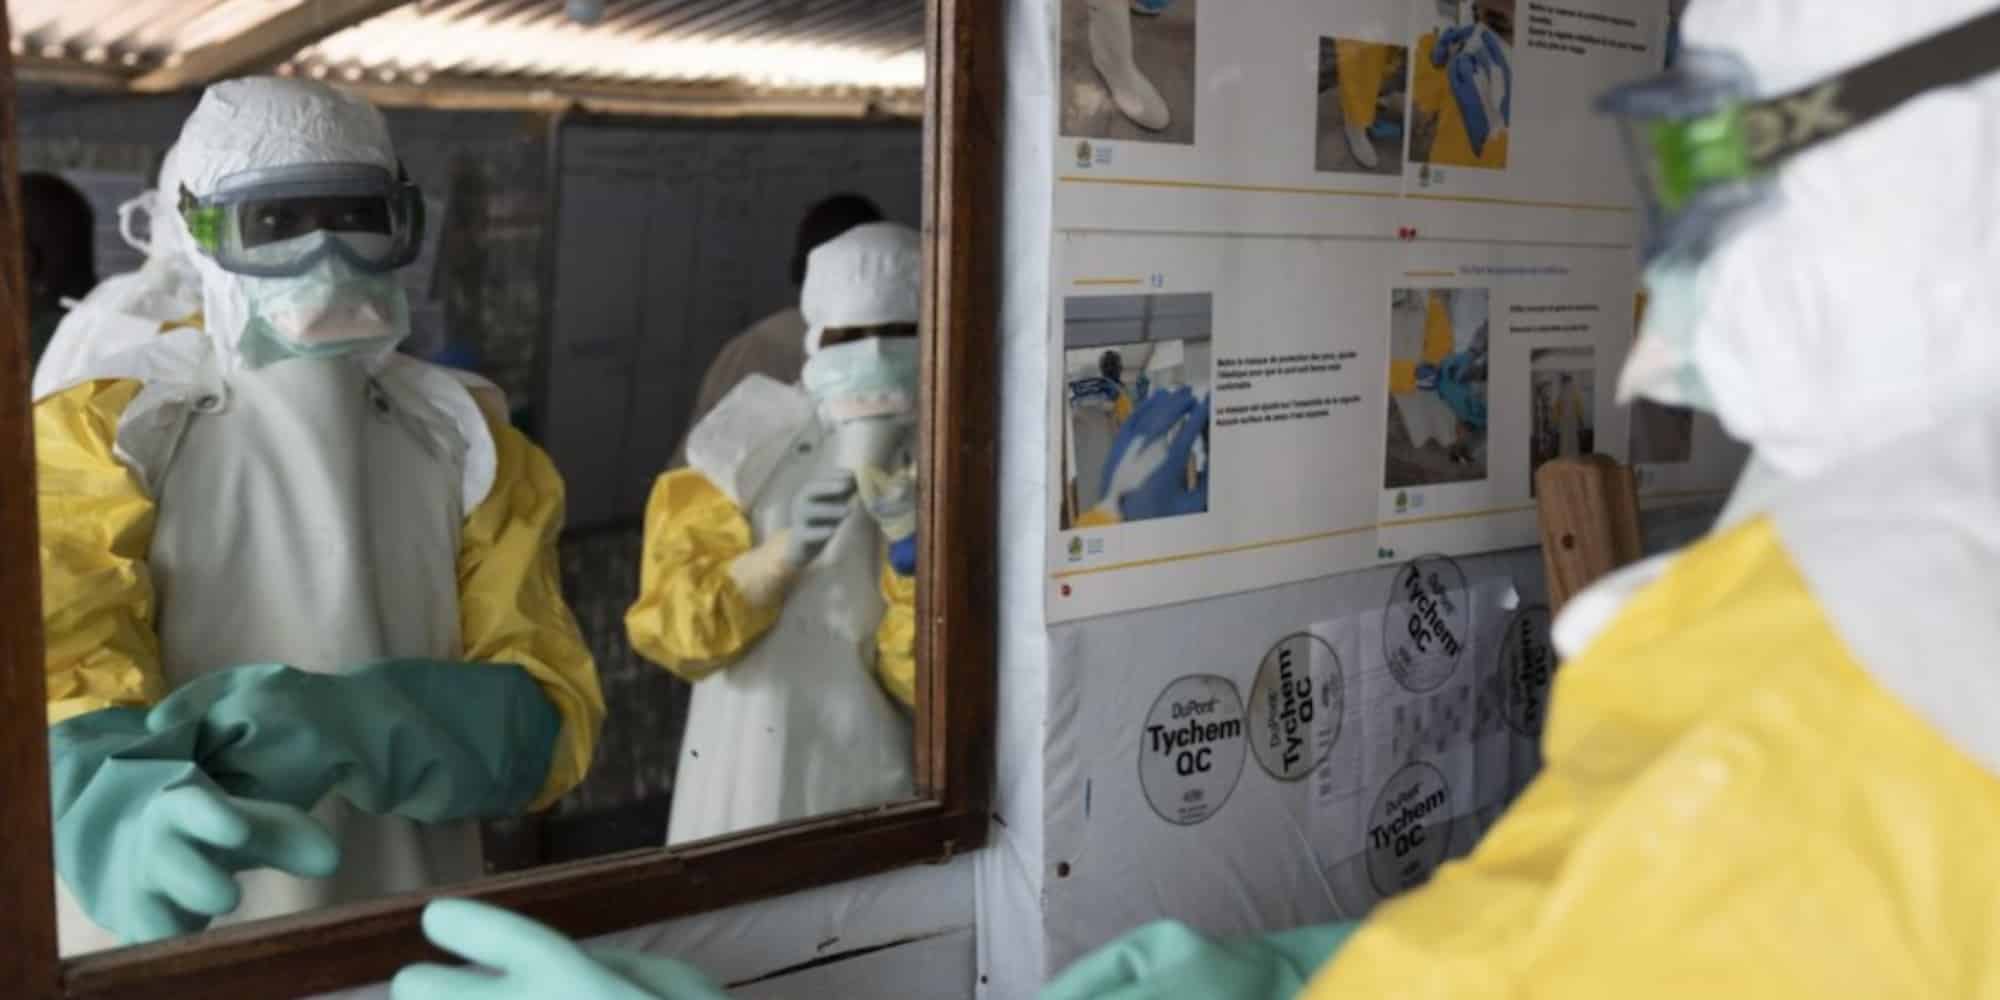 ebola - Ανησυχία για την εμφάνιση του Έμπολα στην Ελλάδα - Τι λένε οι ειδικοί